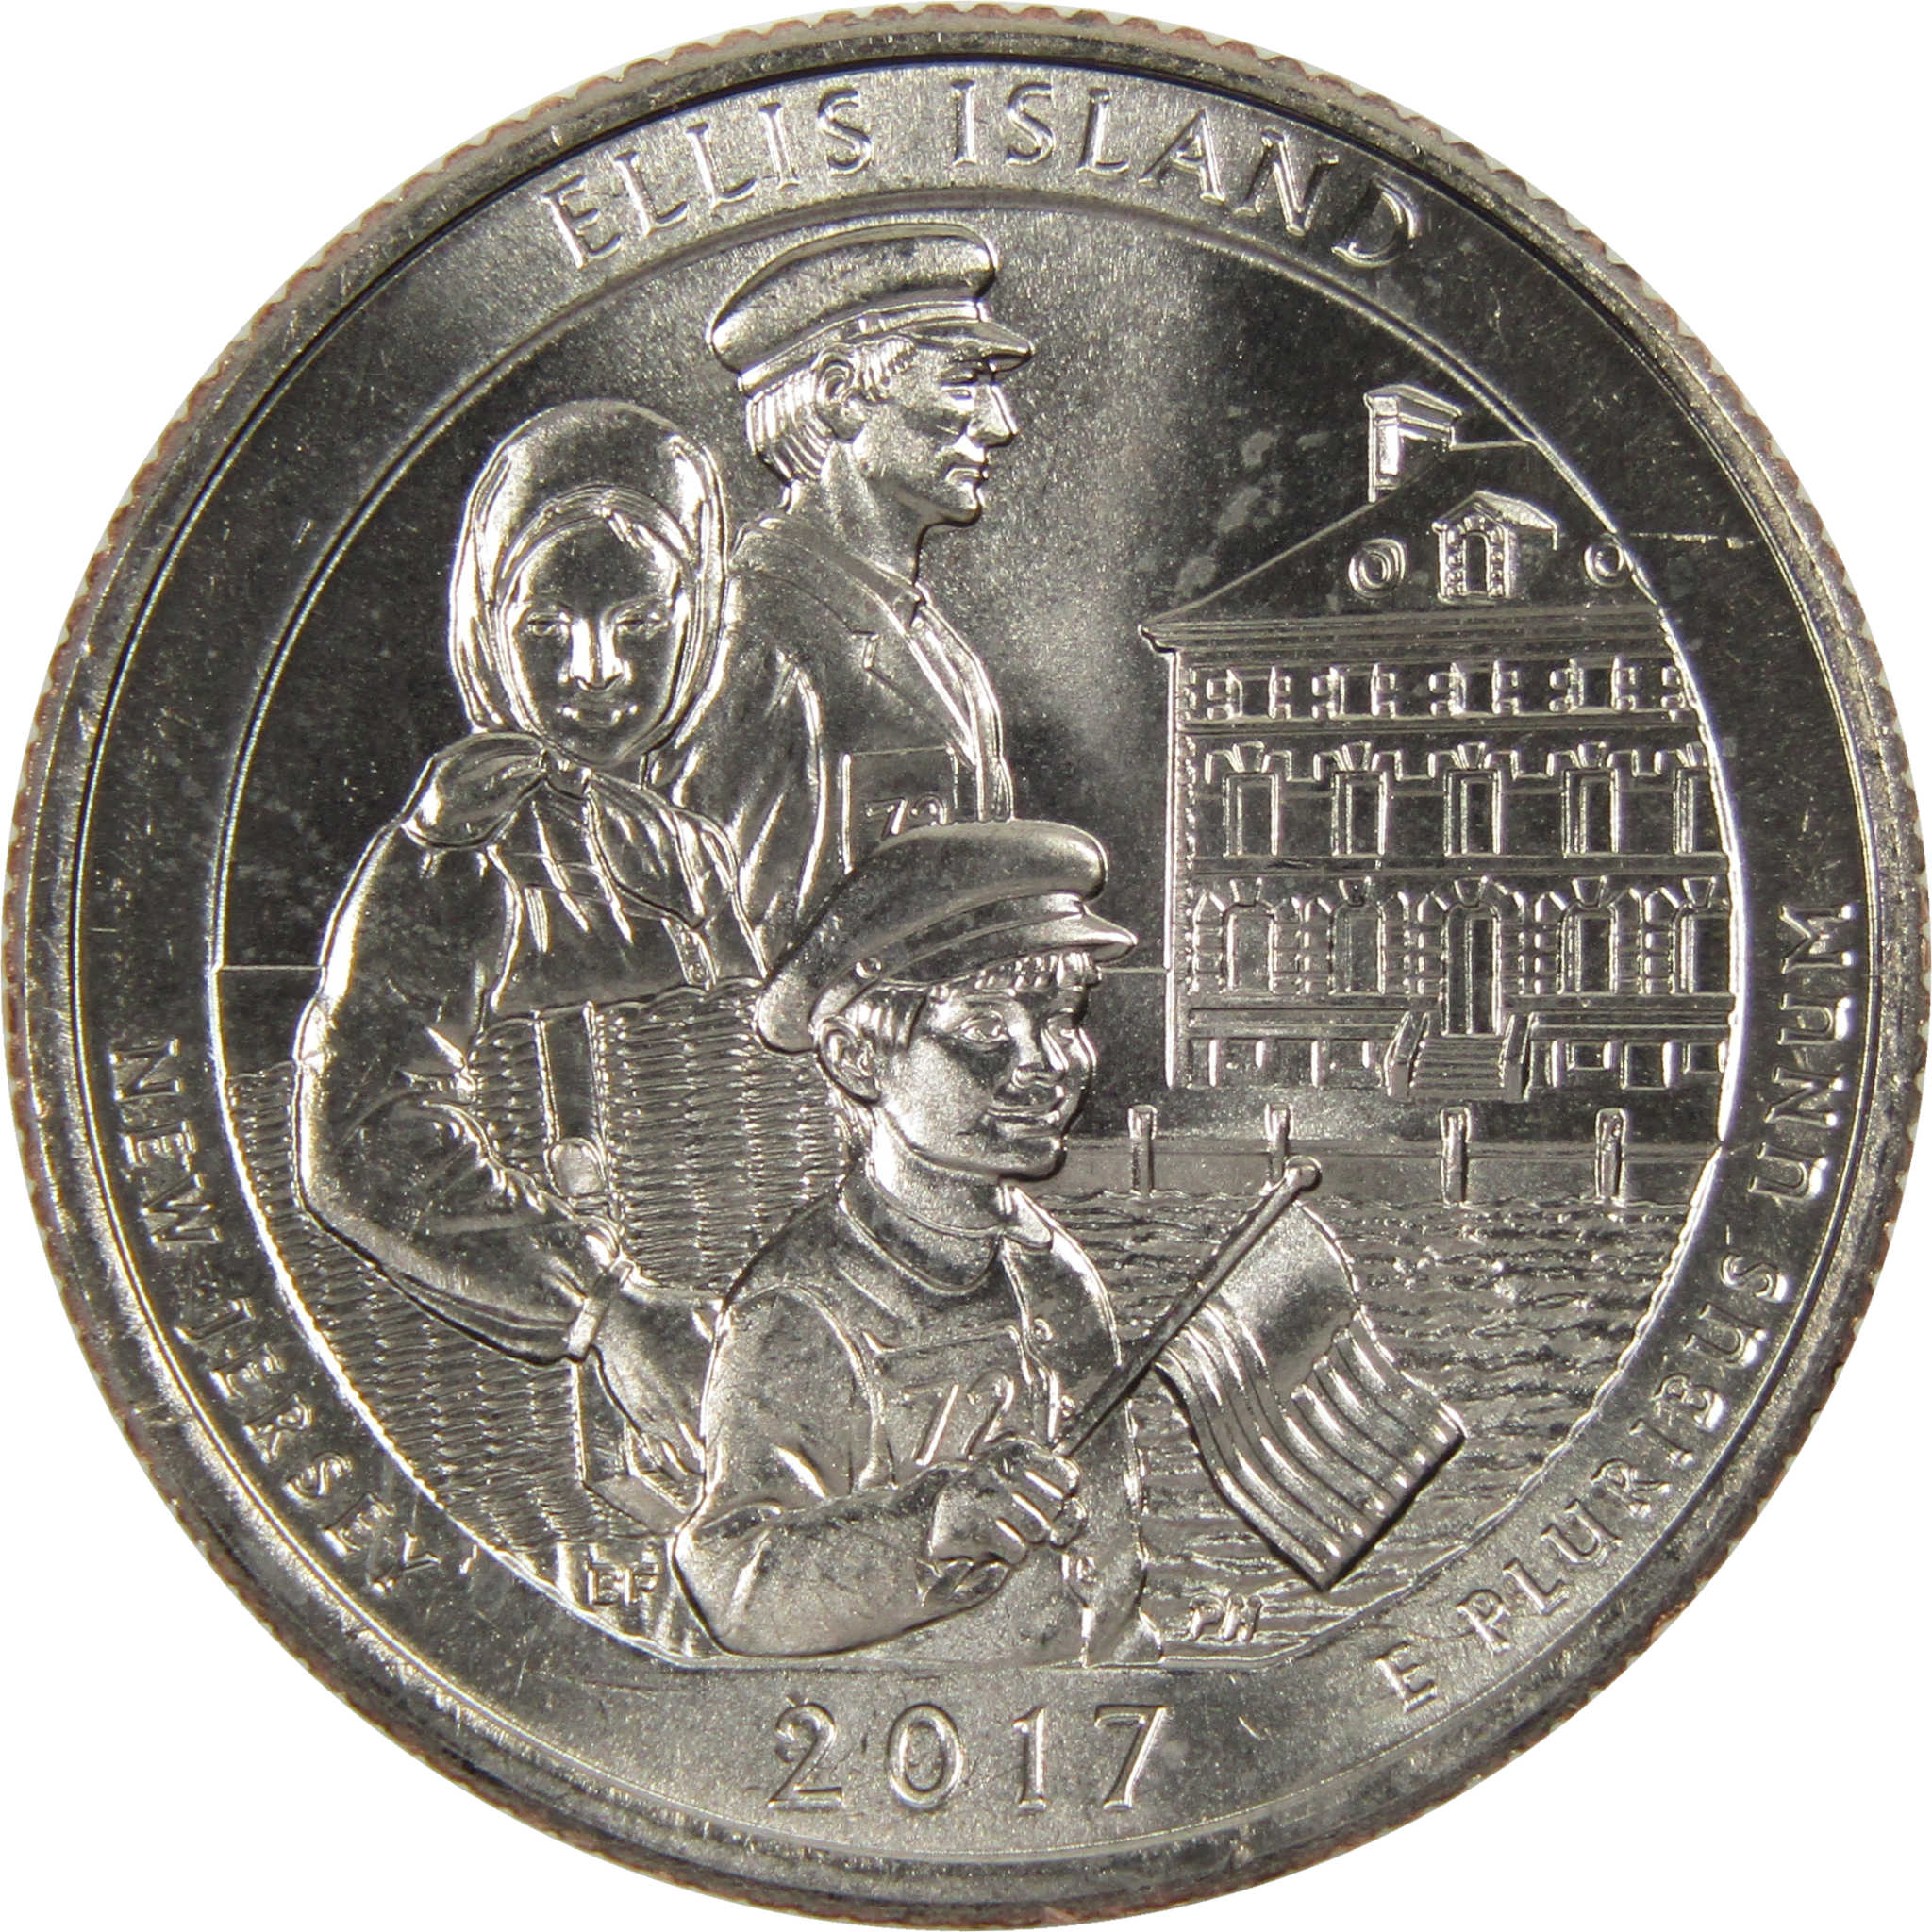 2017 P Ellis Island National Park Quarter BU Uncirculated Clad Coin